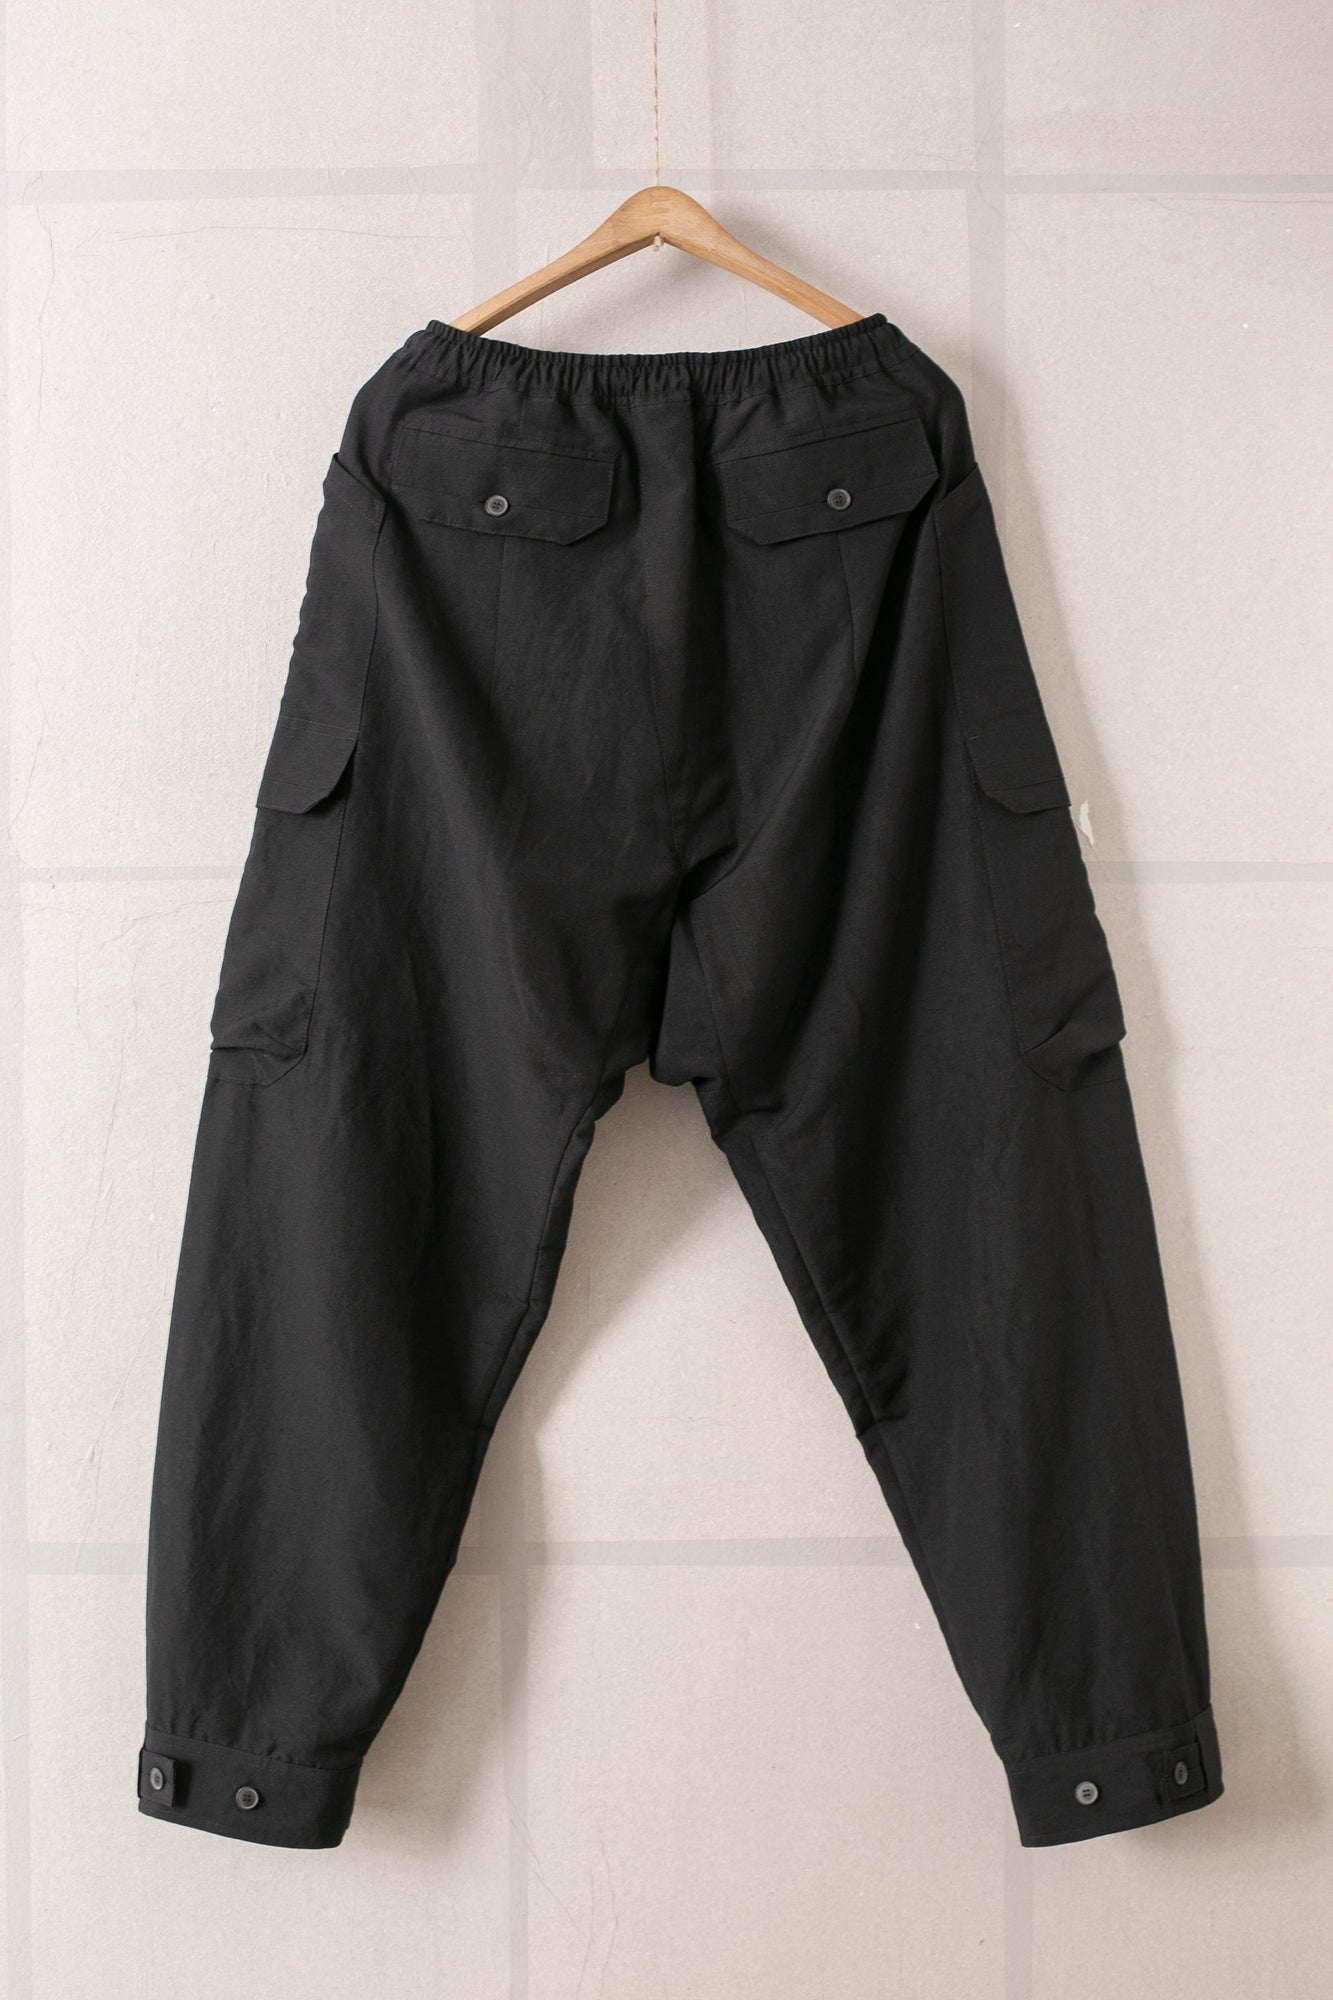 Trousers#64 - Charcoal Dry Wool / Linen Cloth by Jan-Jan Van